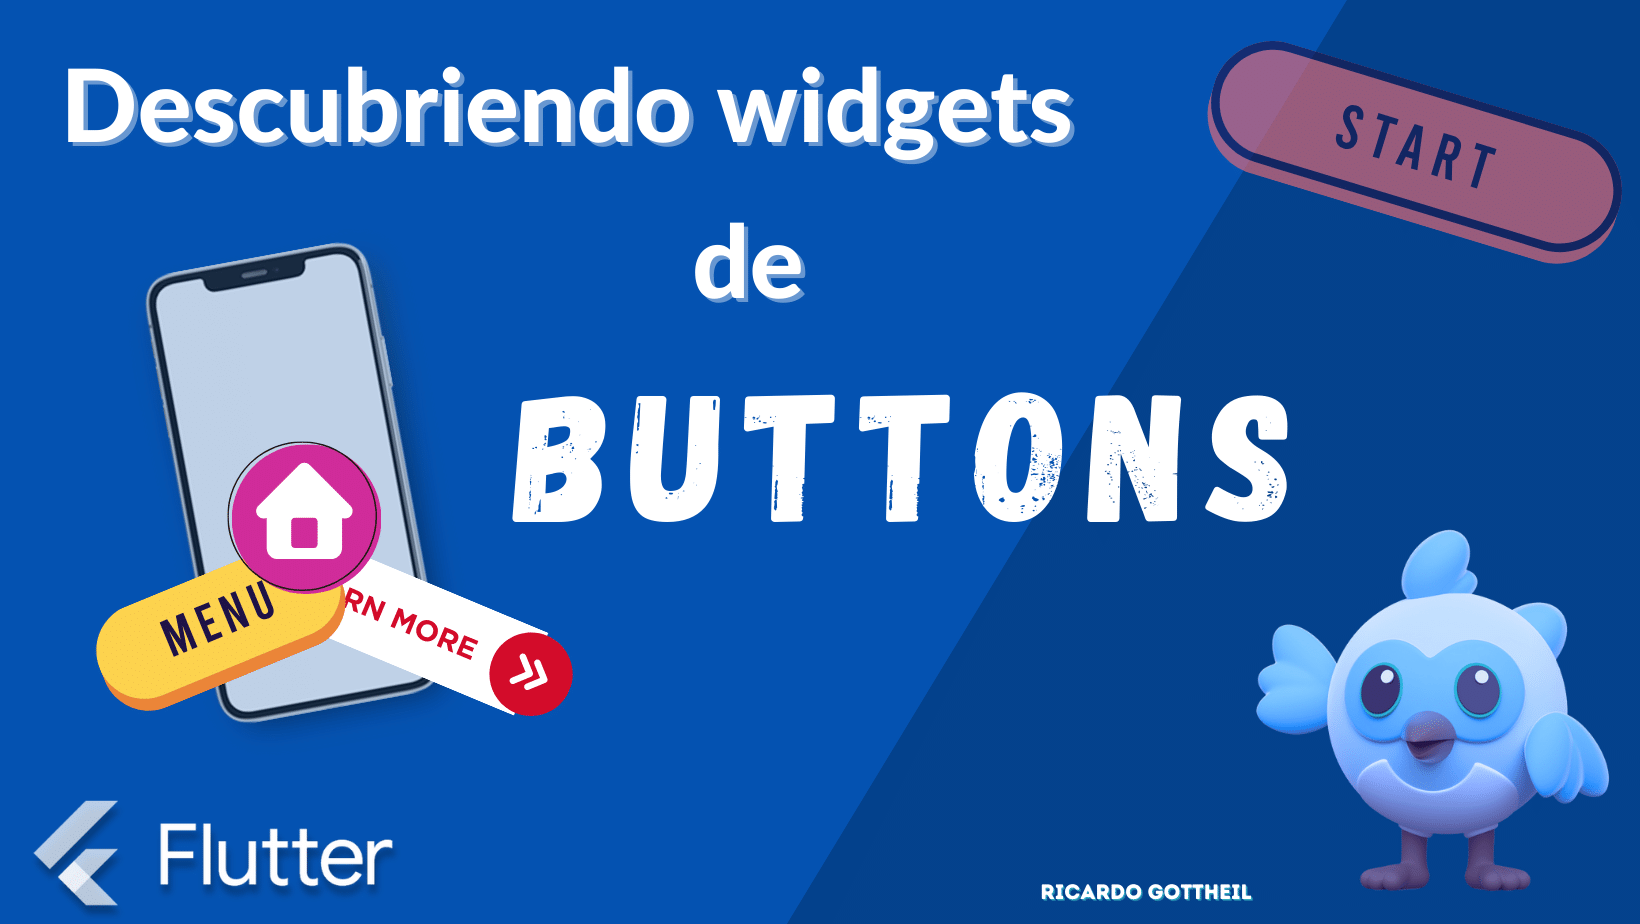 Portada - Descubriendo widgets de buttons